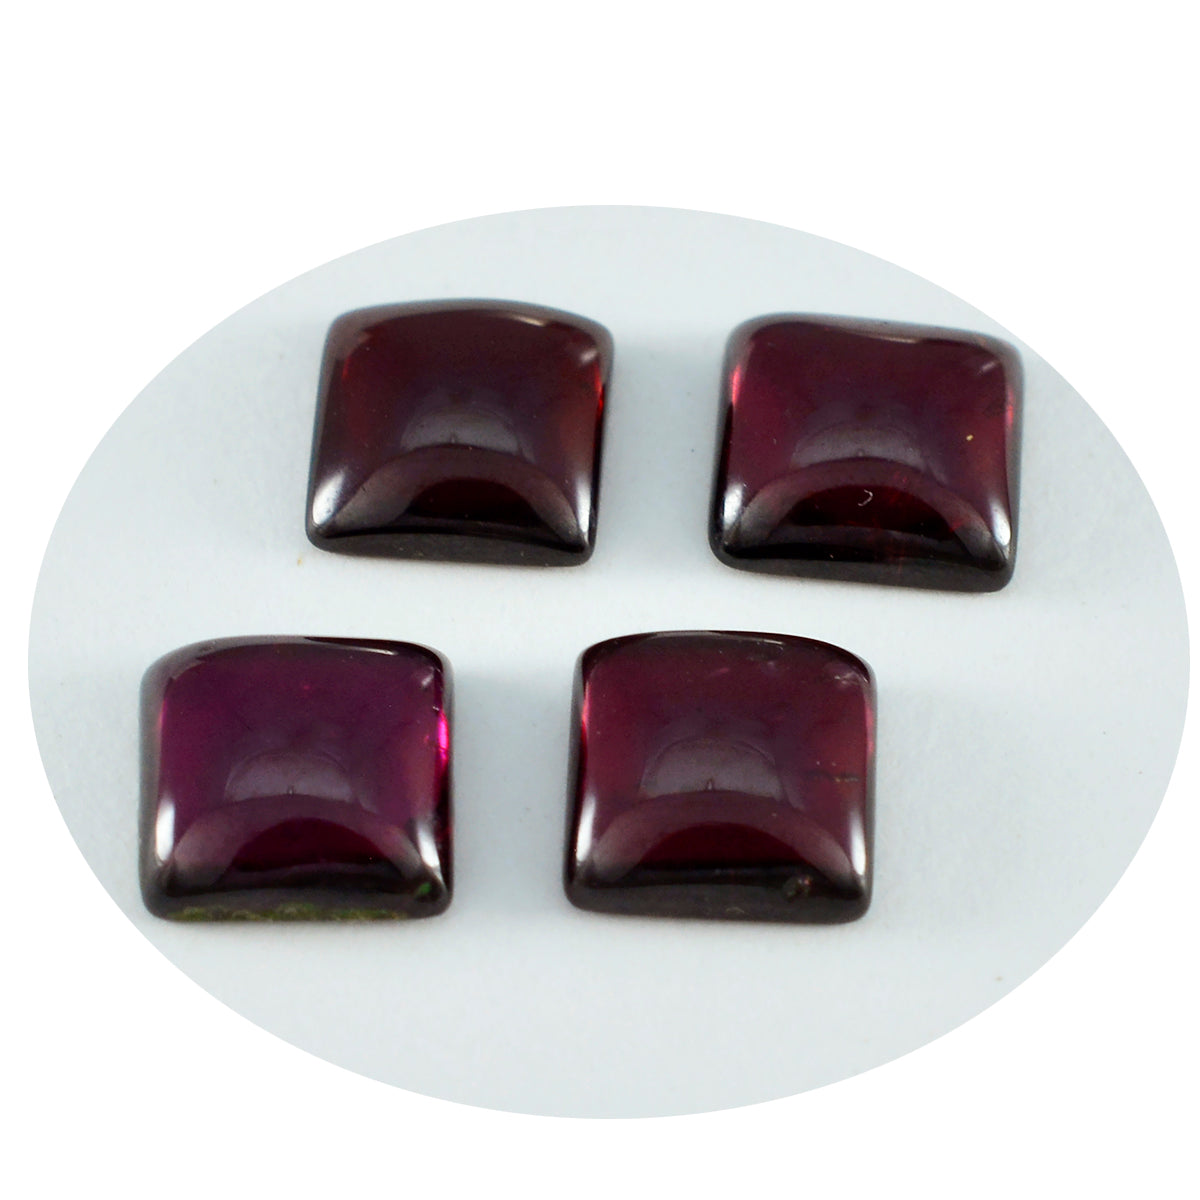 Riyogems 1PC Red Garnet Cabochon 14x14 mm Square Shape startling Quality Loose Gems